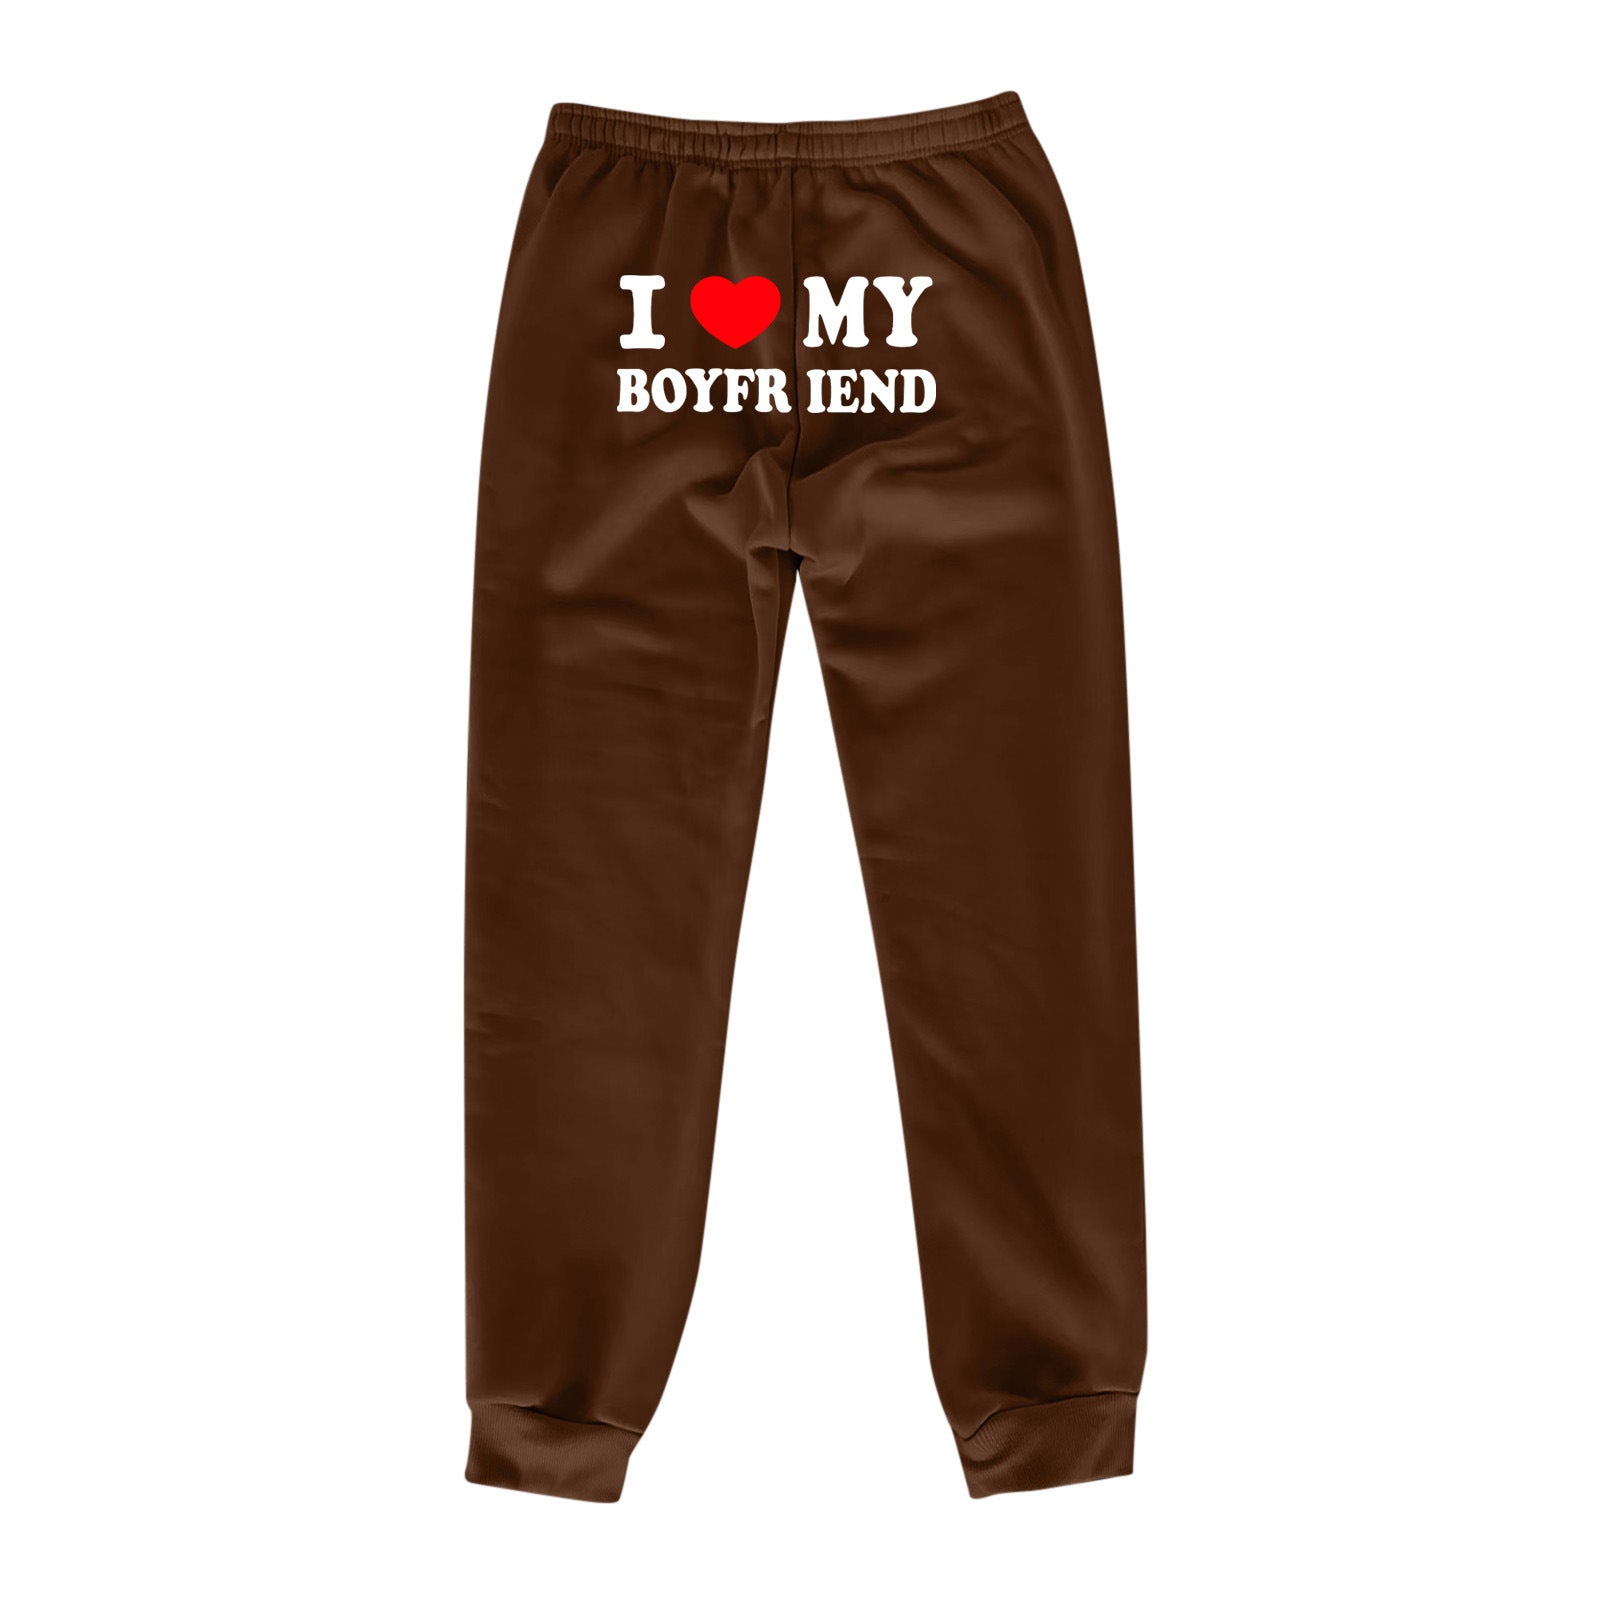 I Love MY BOYFRIEND  Casual Sweatpants - SELFTRITSS